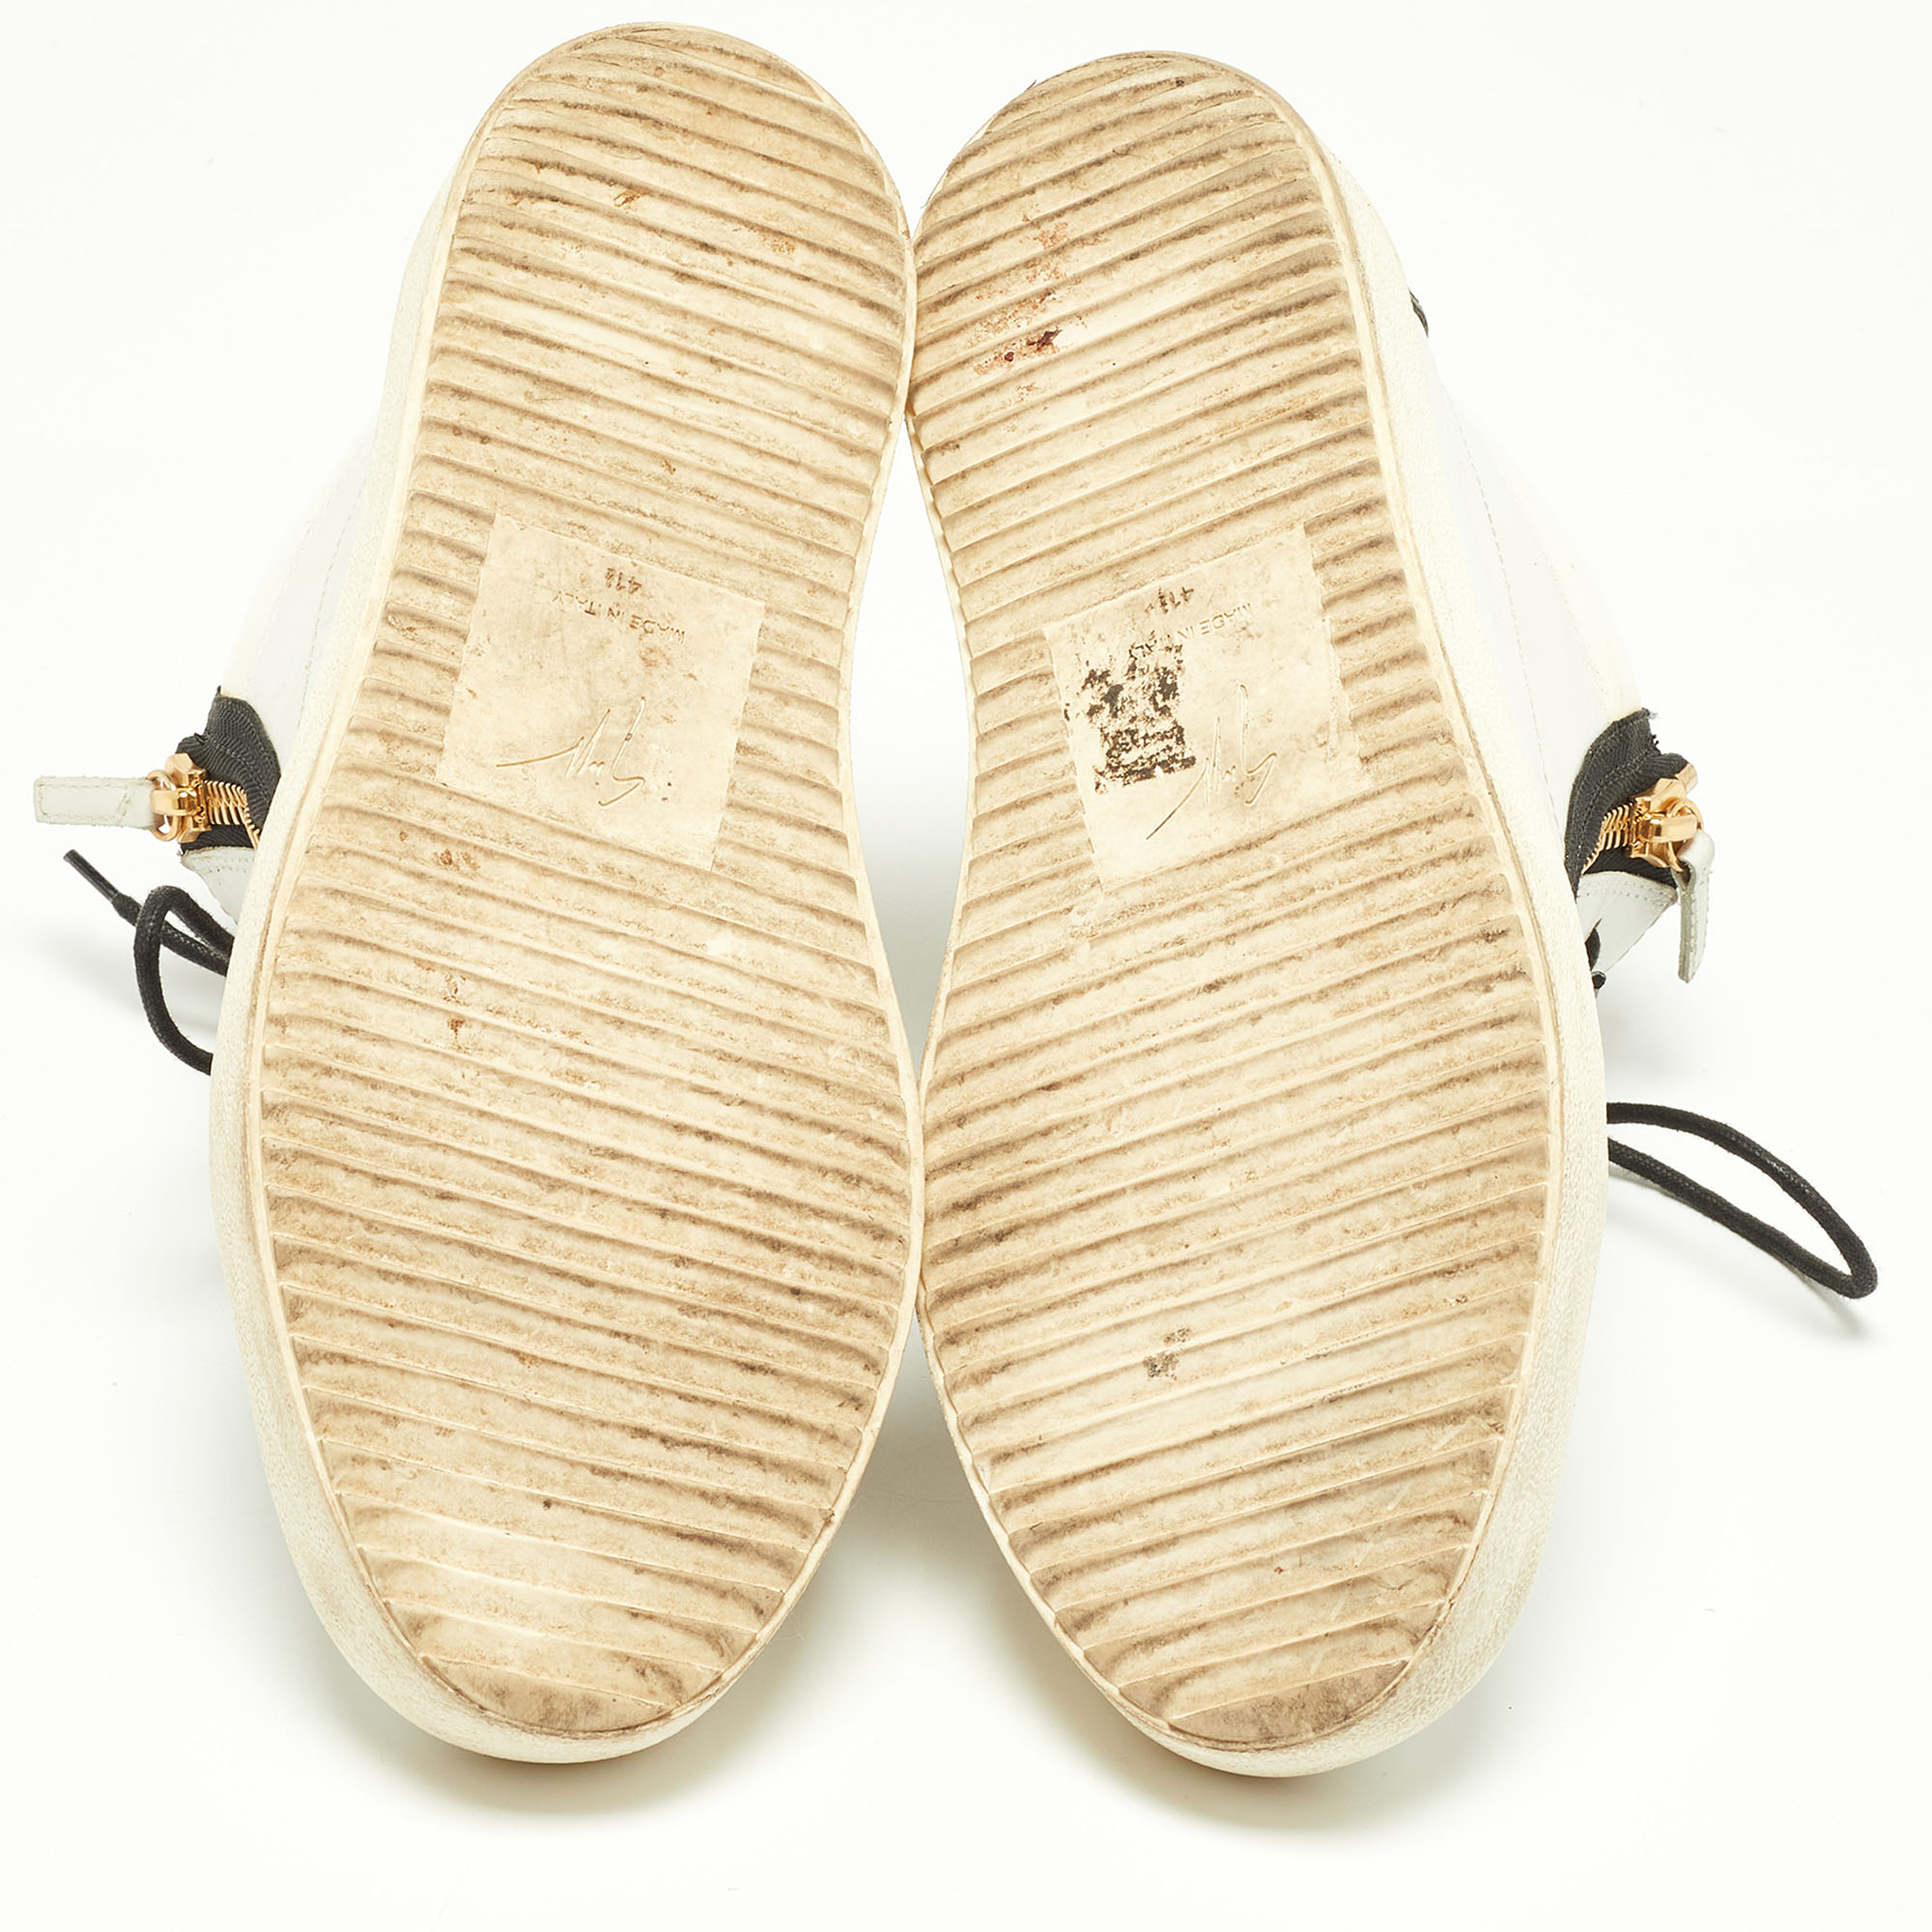 Giuseppe Zanotti White/Black Leather Double Zip Sneakers Size 41.5